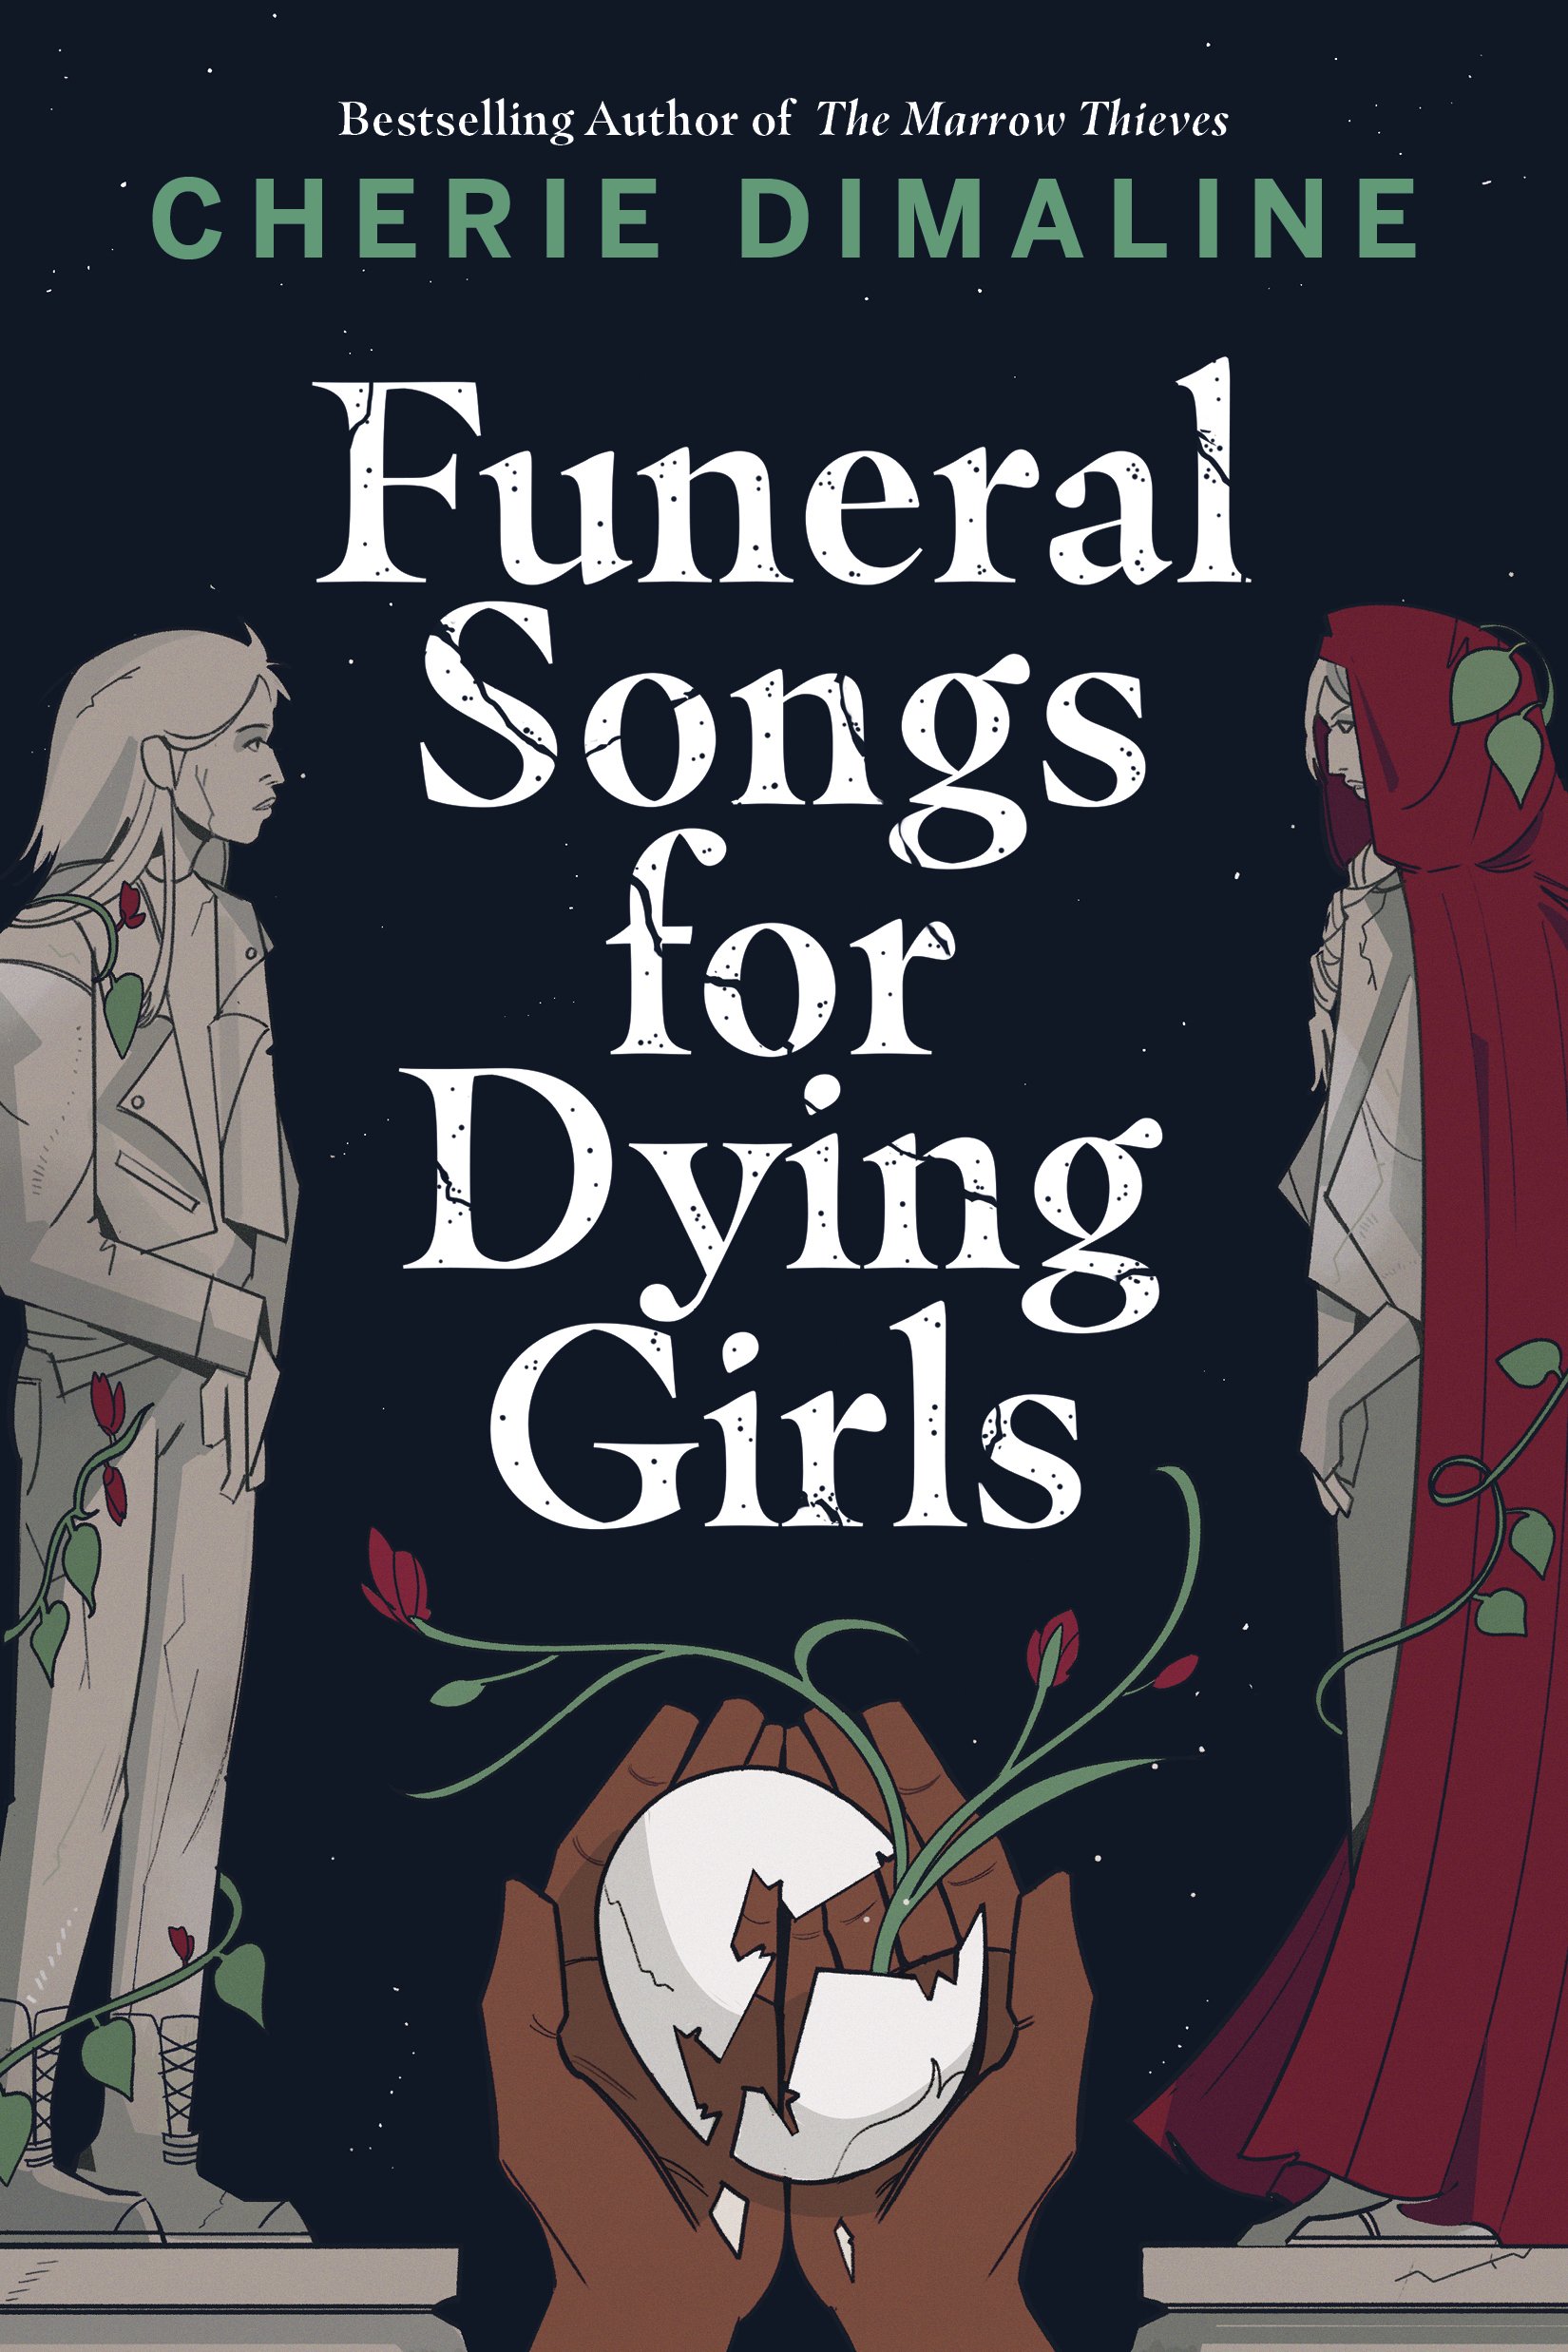 Dimaline, Cherie - Funeral Songs for Dying Girls - FINAL COVER.jpg